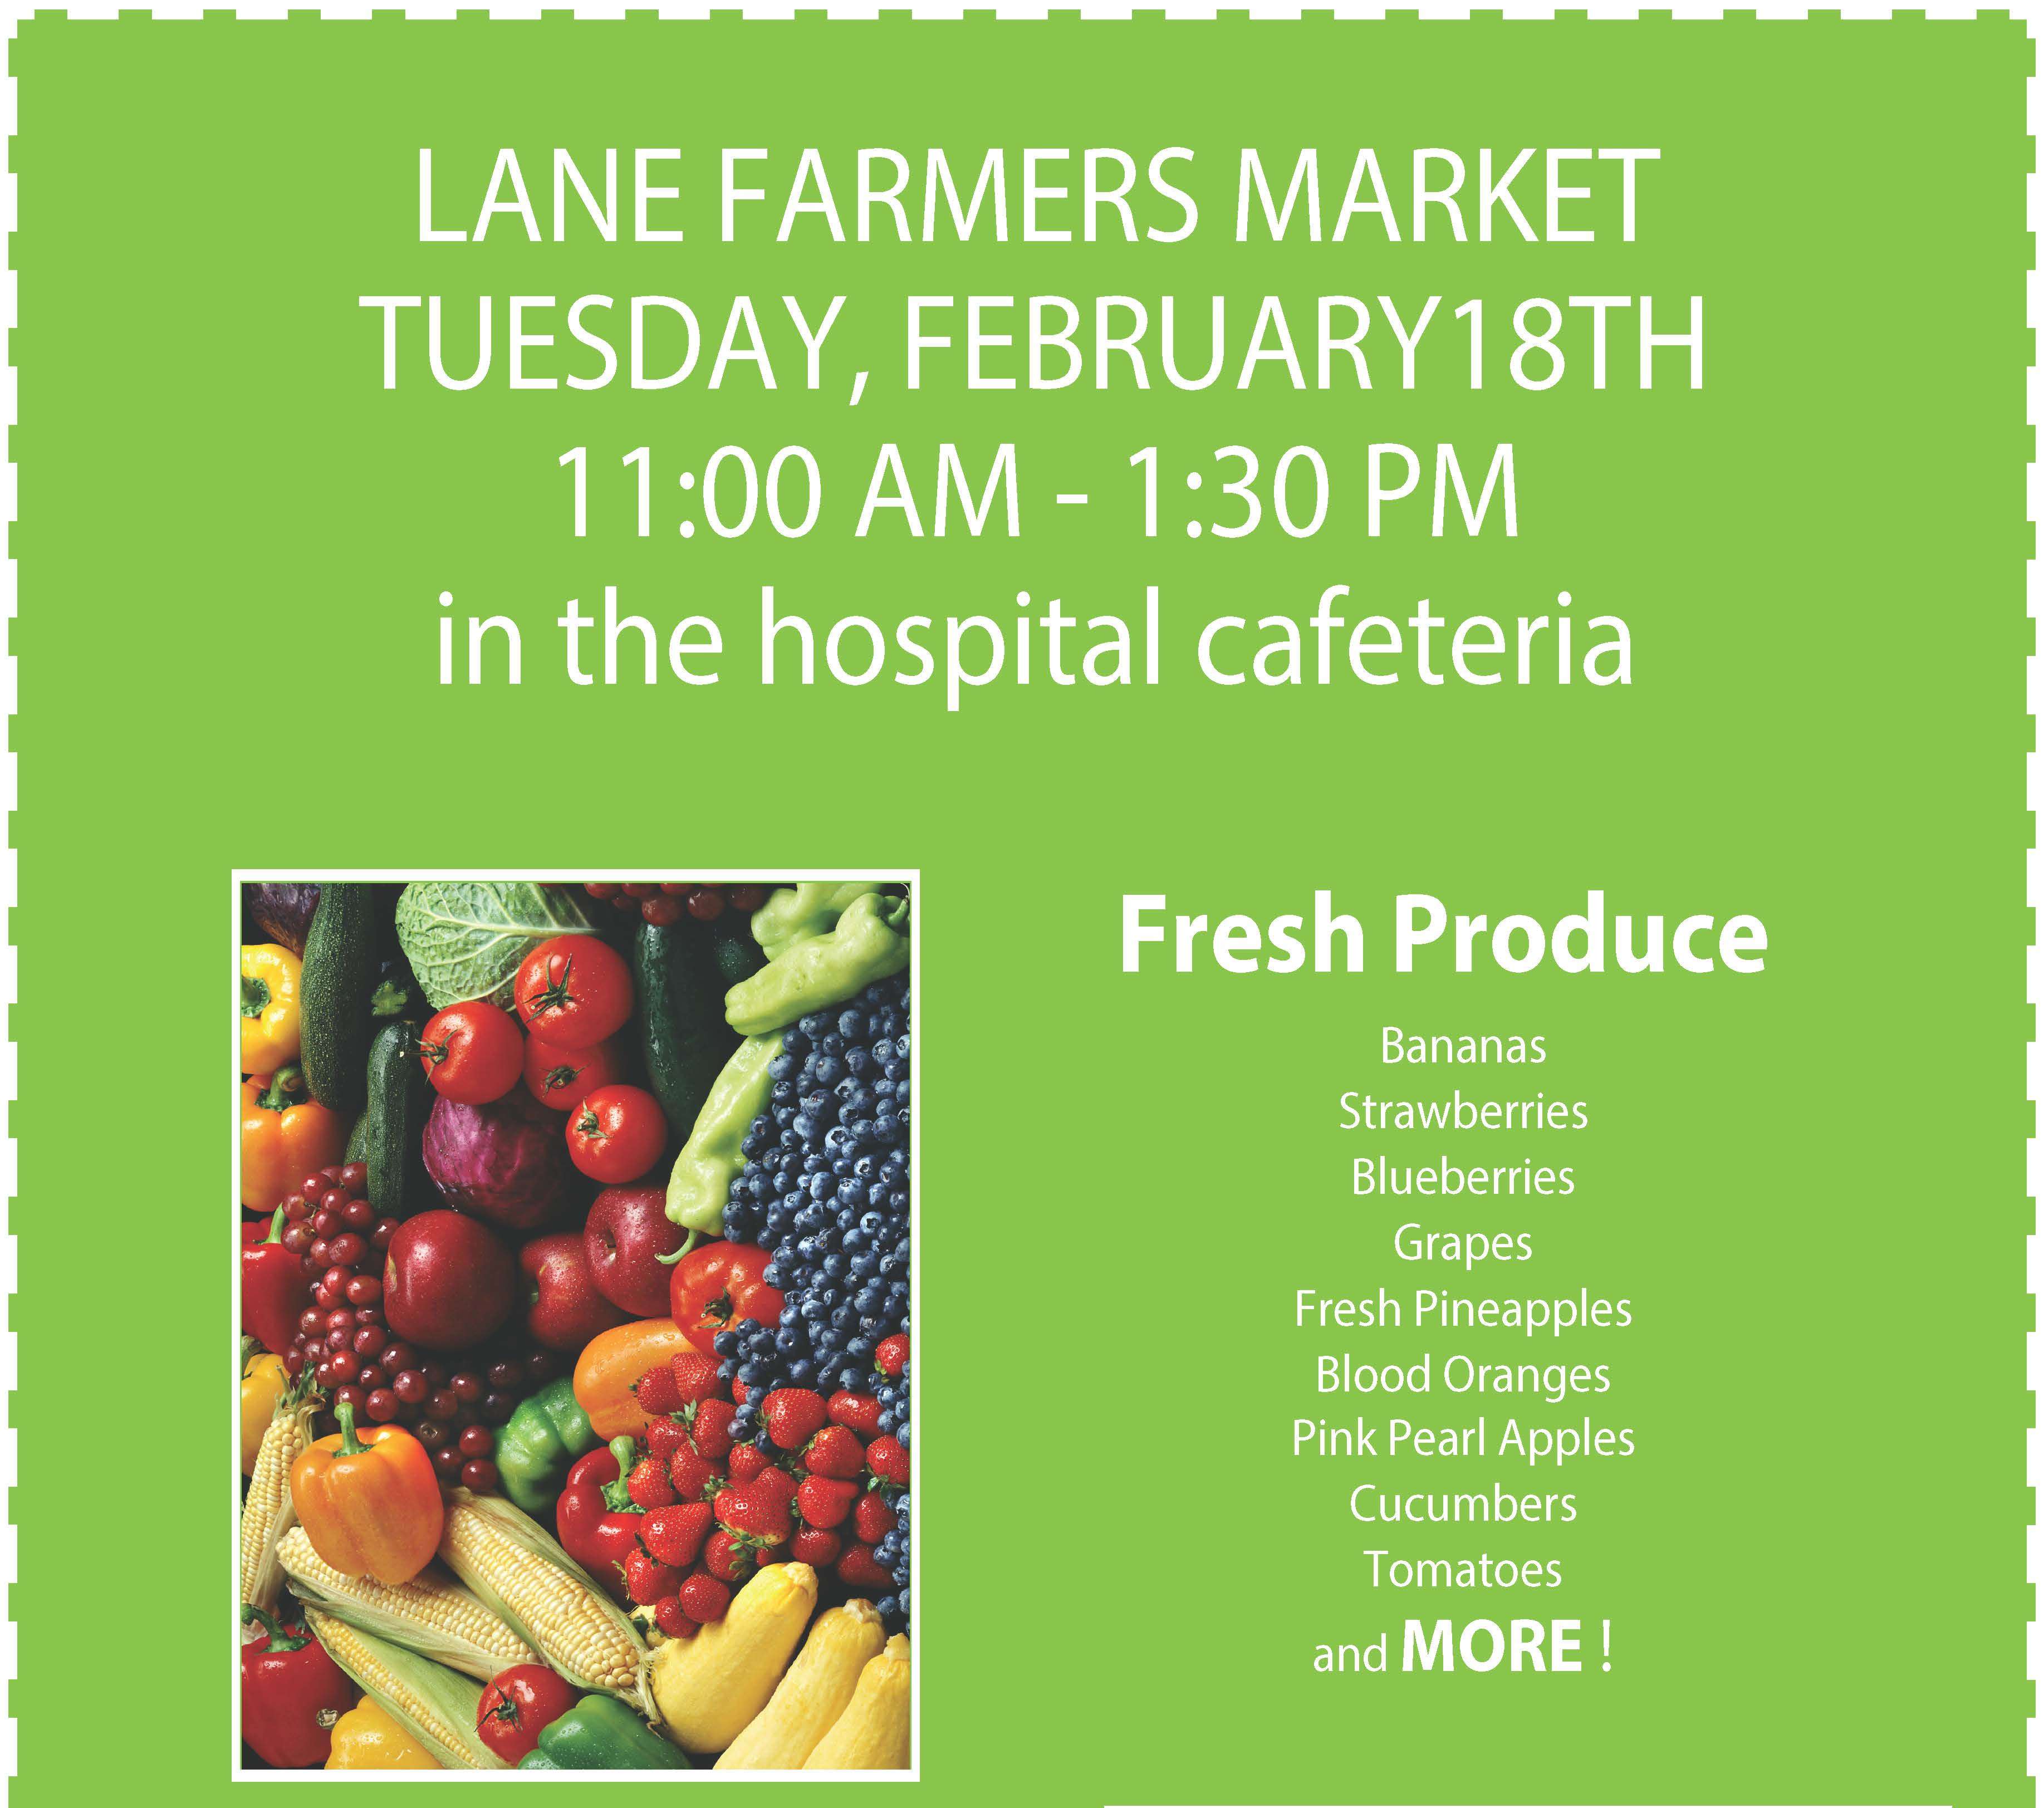 Lane Farmers Market February 18